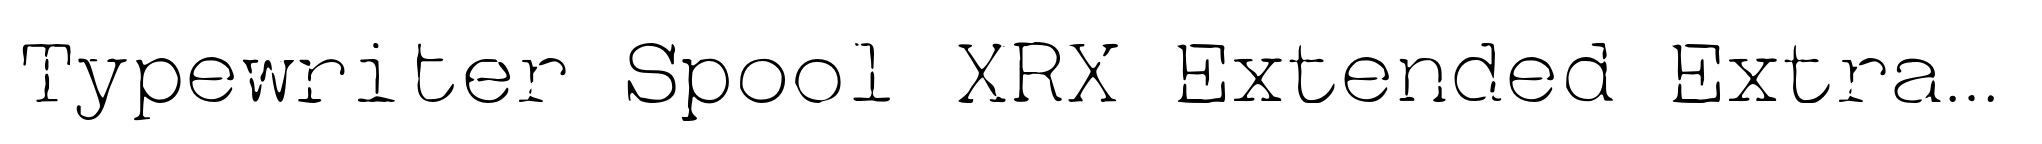 Typewriter Spool XRX Extended Extra Light image